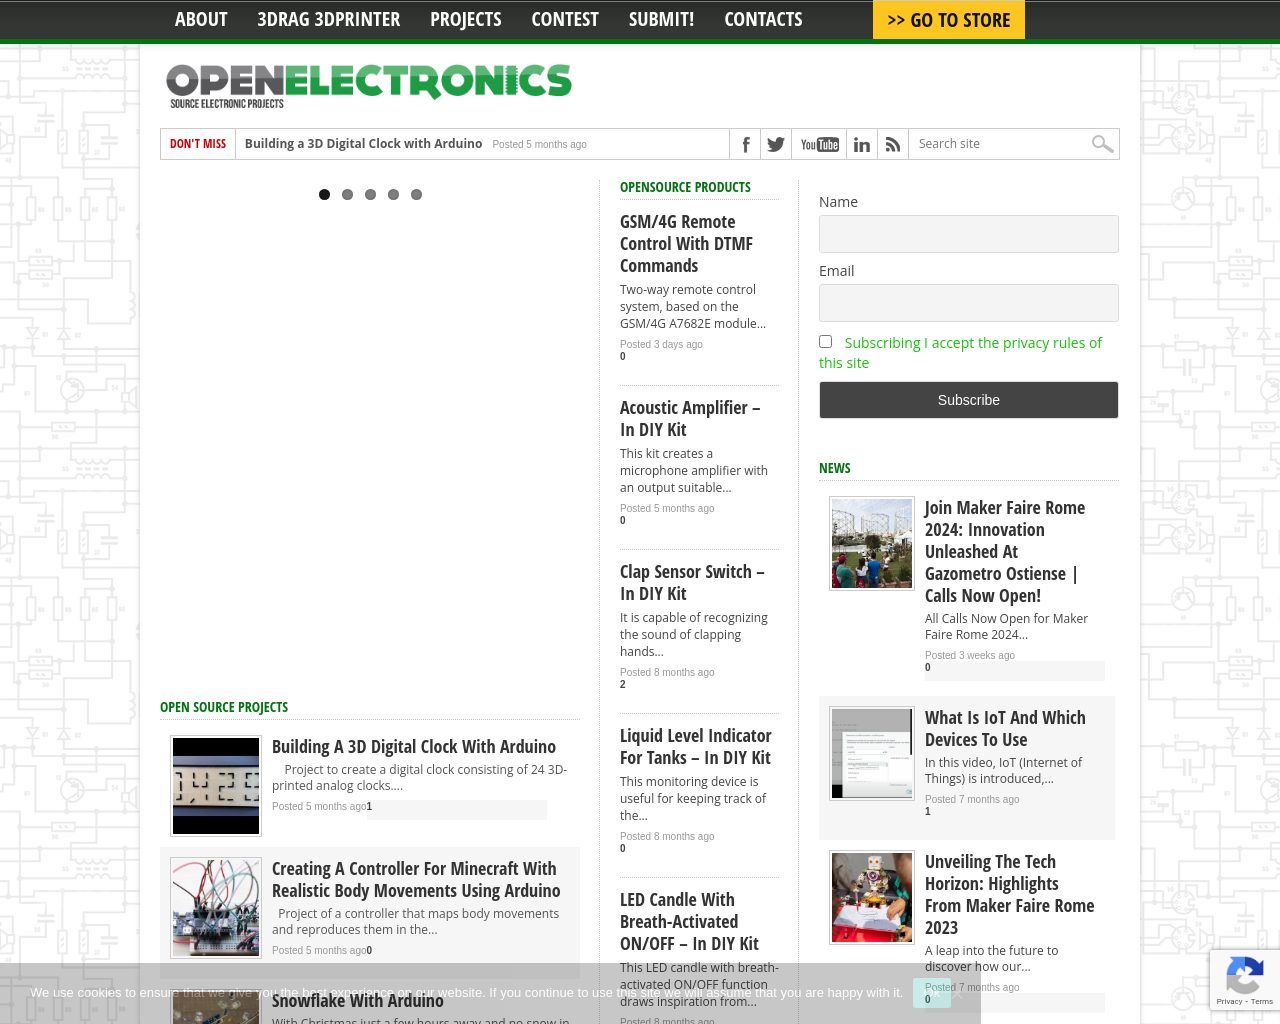 open-electronics.org